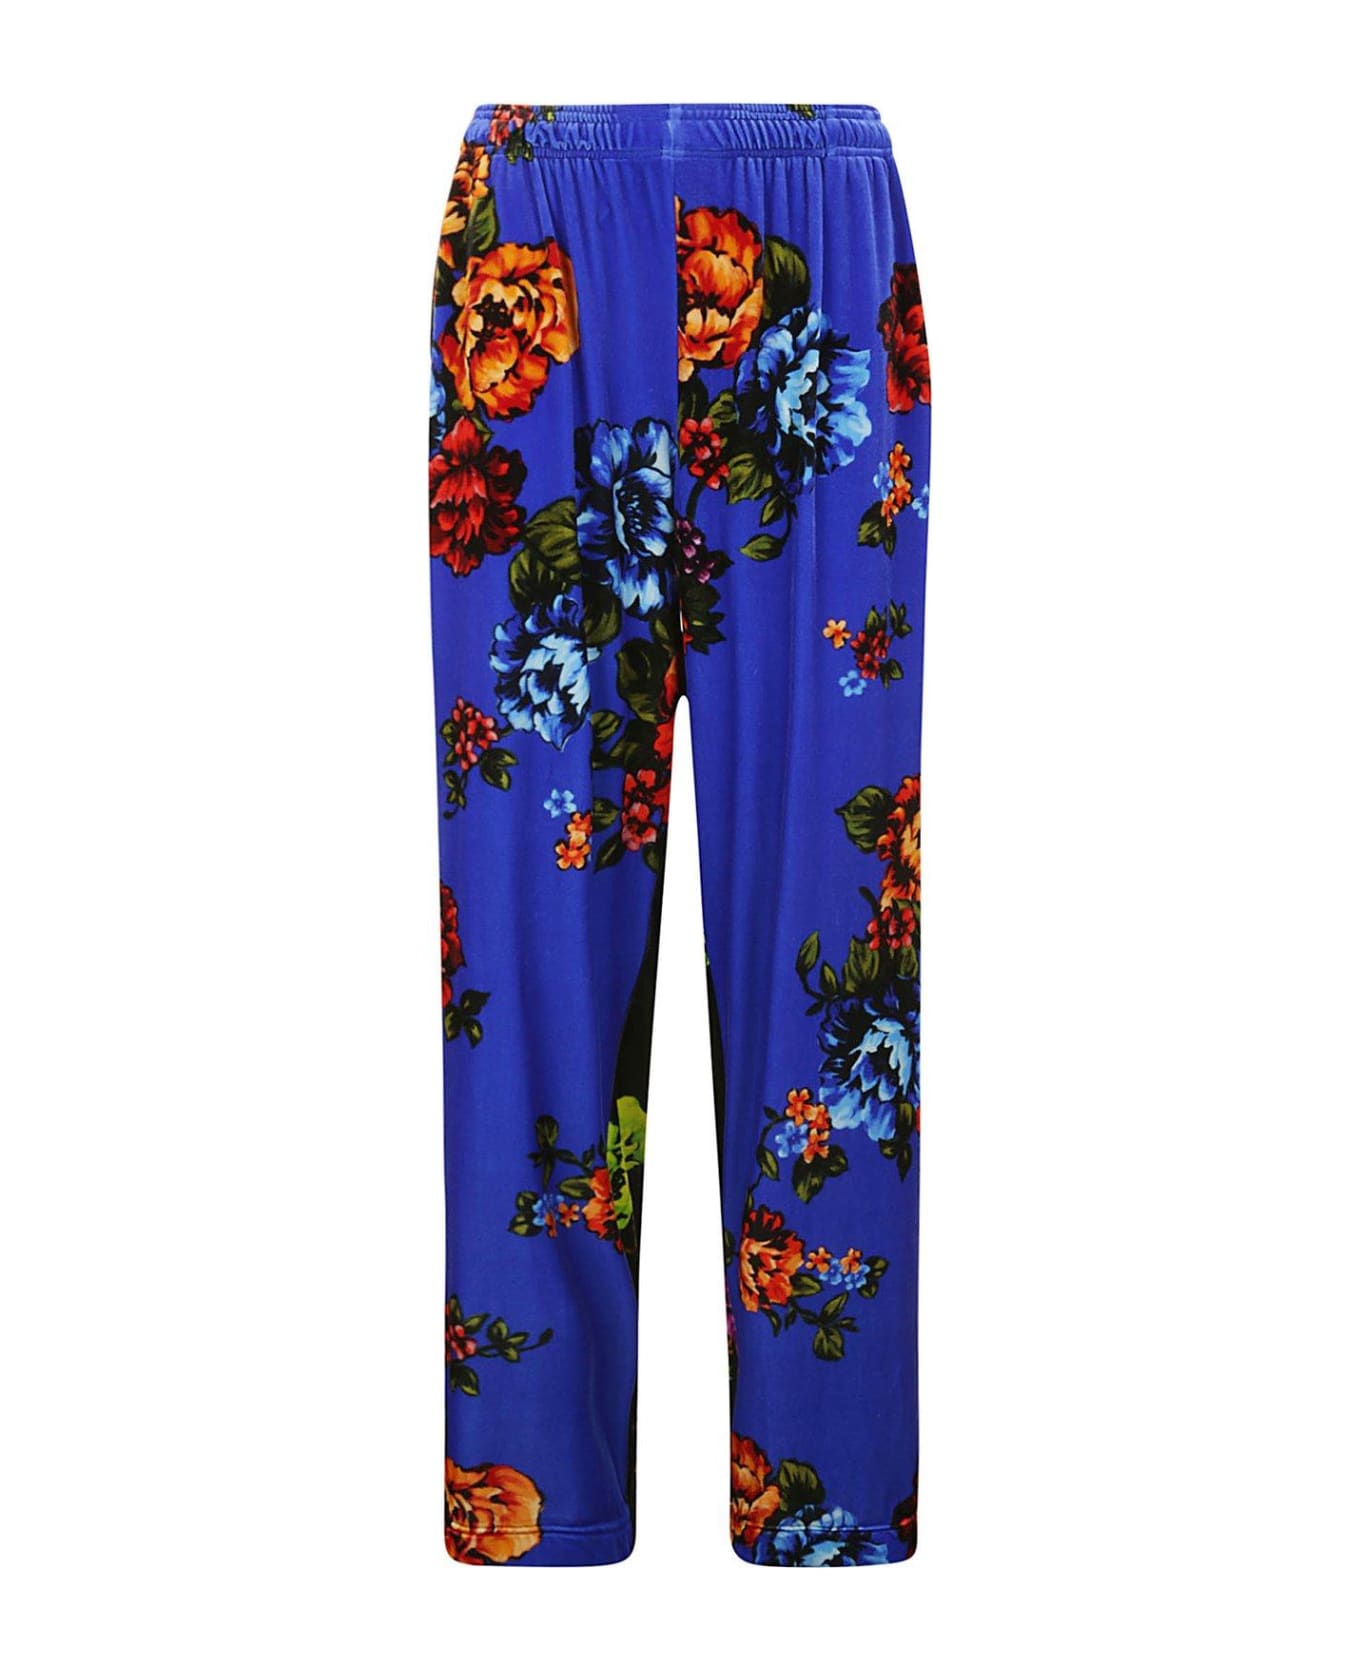 VETEMENTS Floral Print Panelled Pants - BLUE/BLACK ボトムス